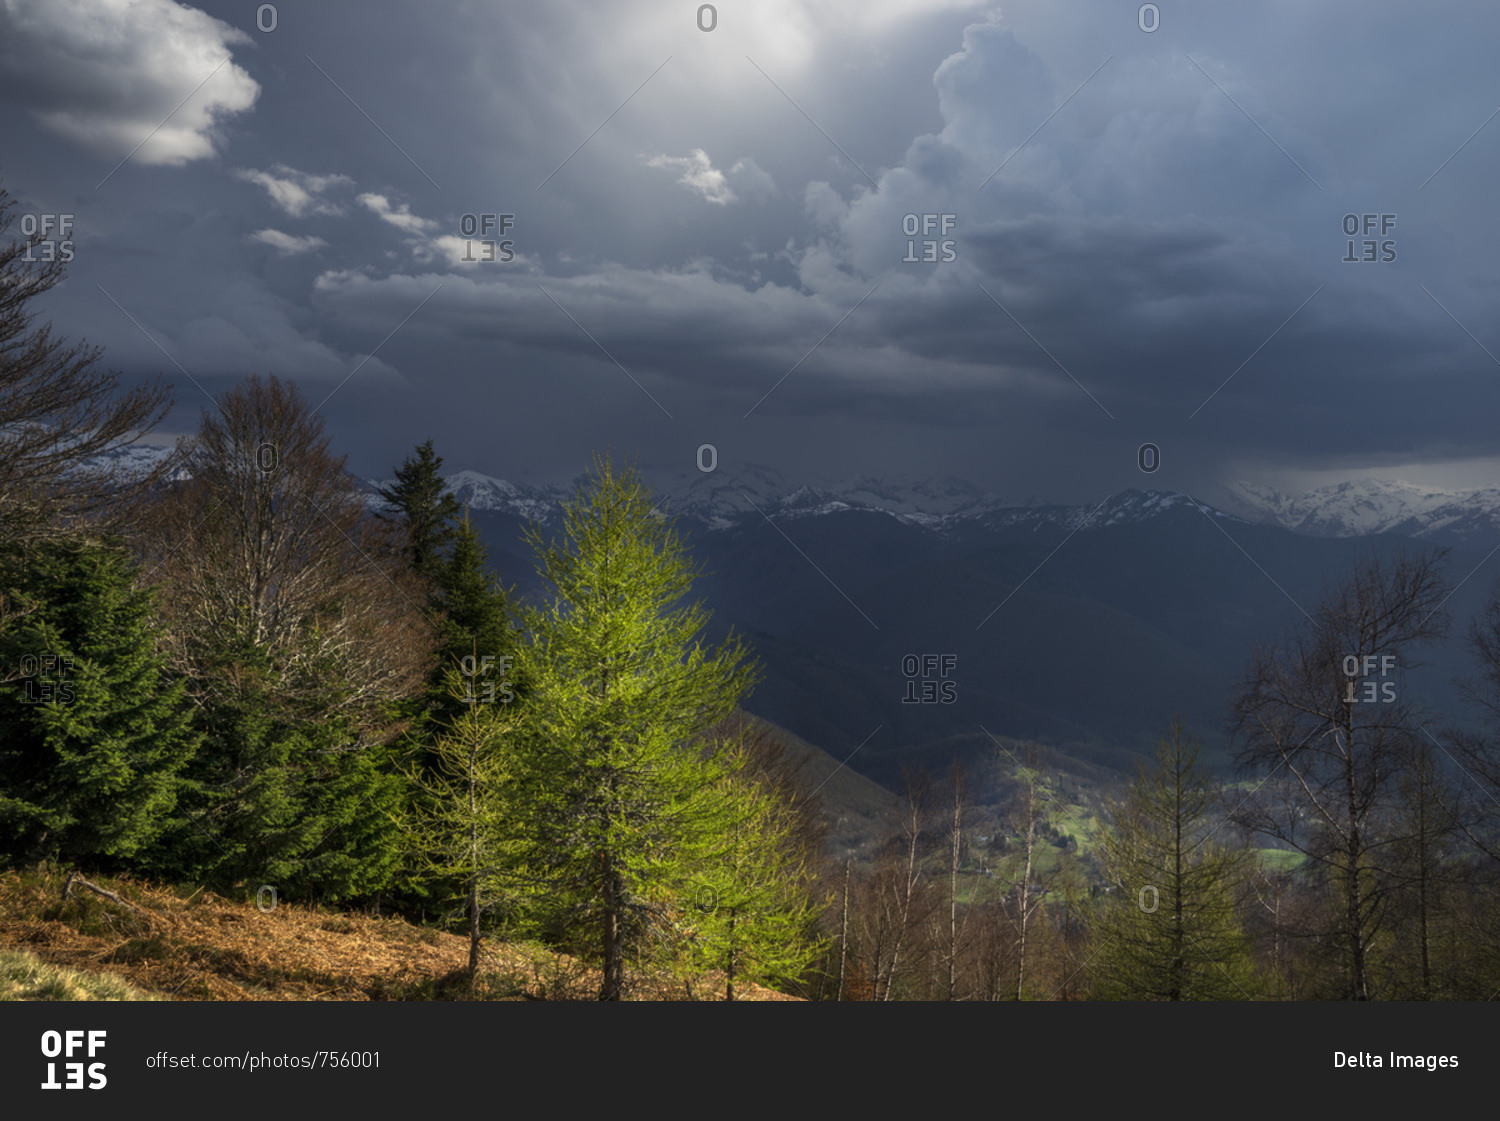 France, Ariege, view over Pyrenees Mountains from Col de la Crouzette, thunderstorm